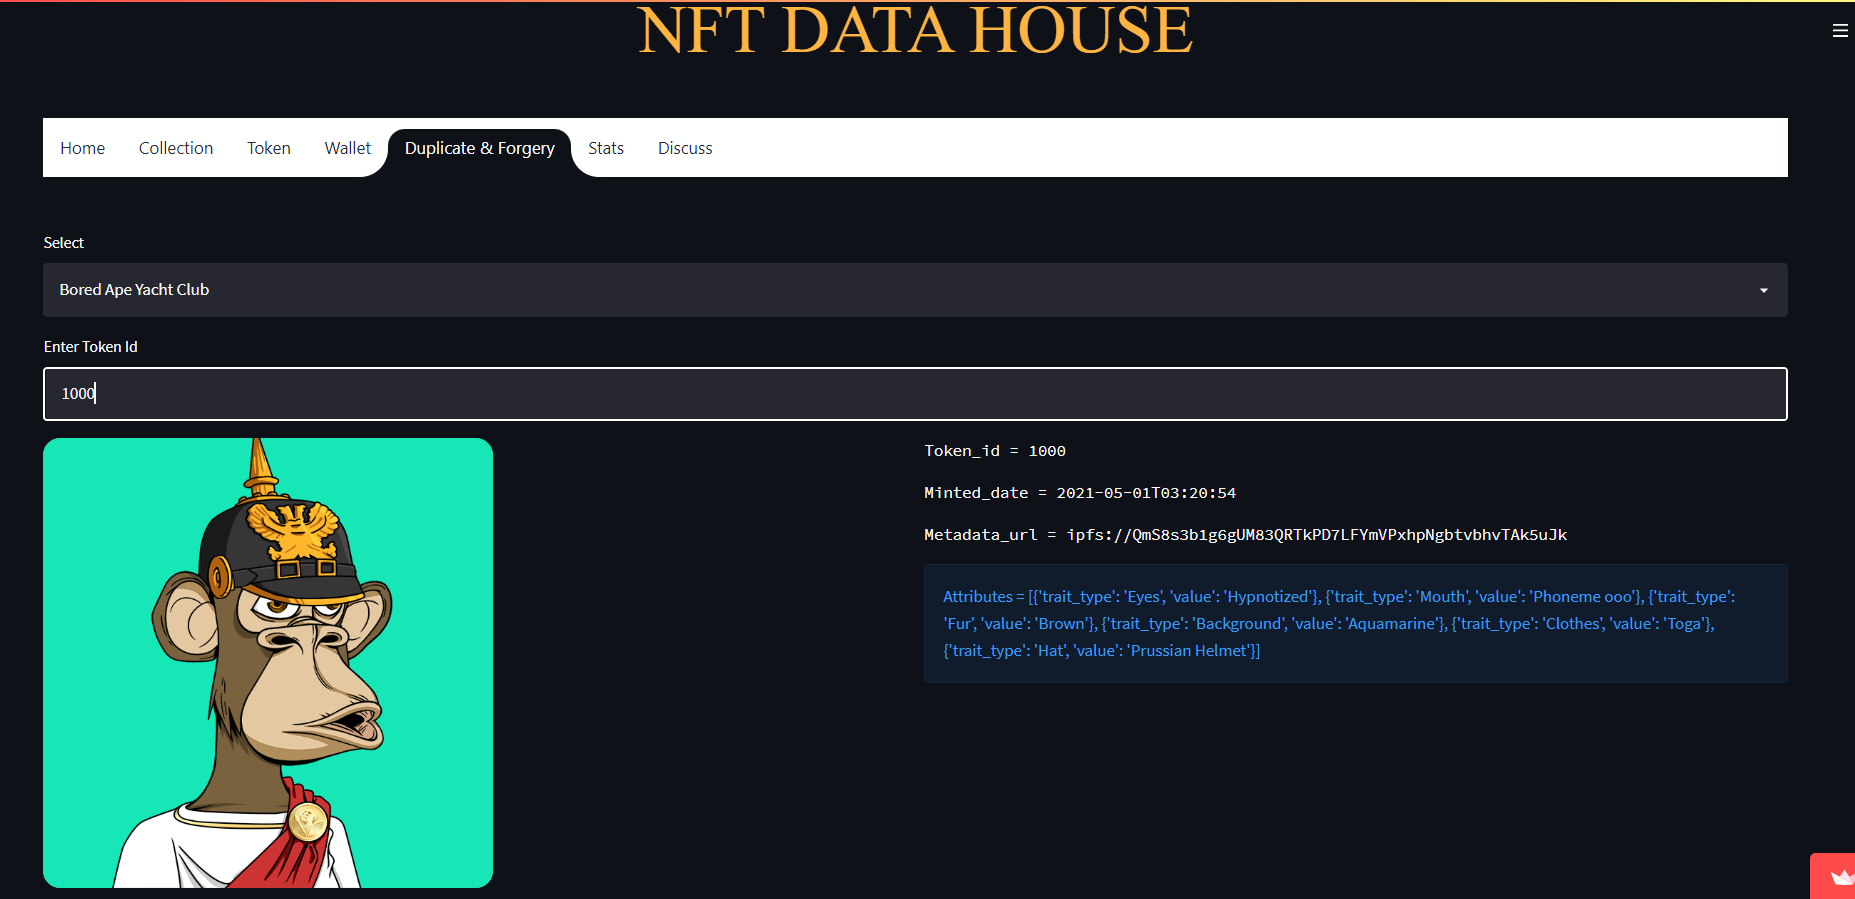 NFT Data House showcase